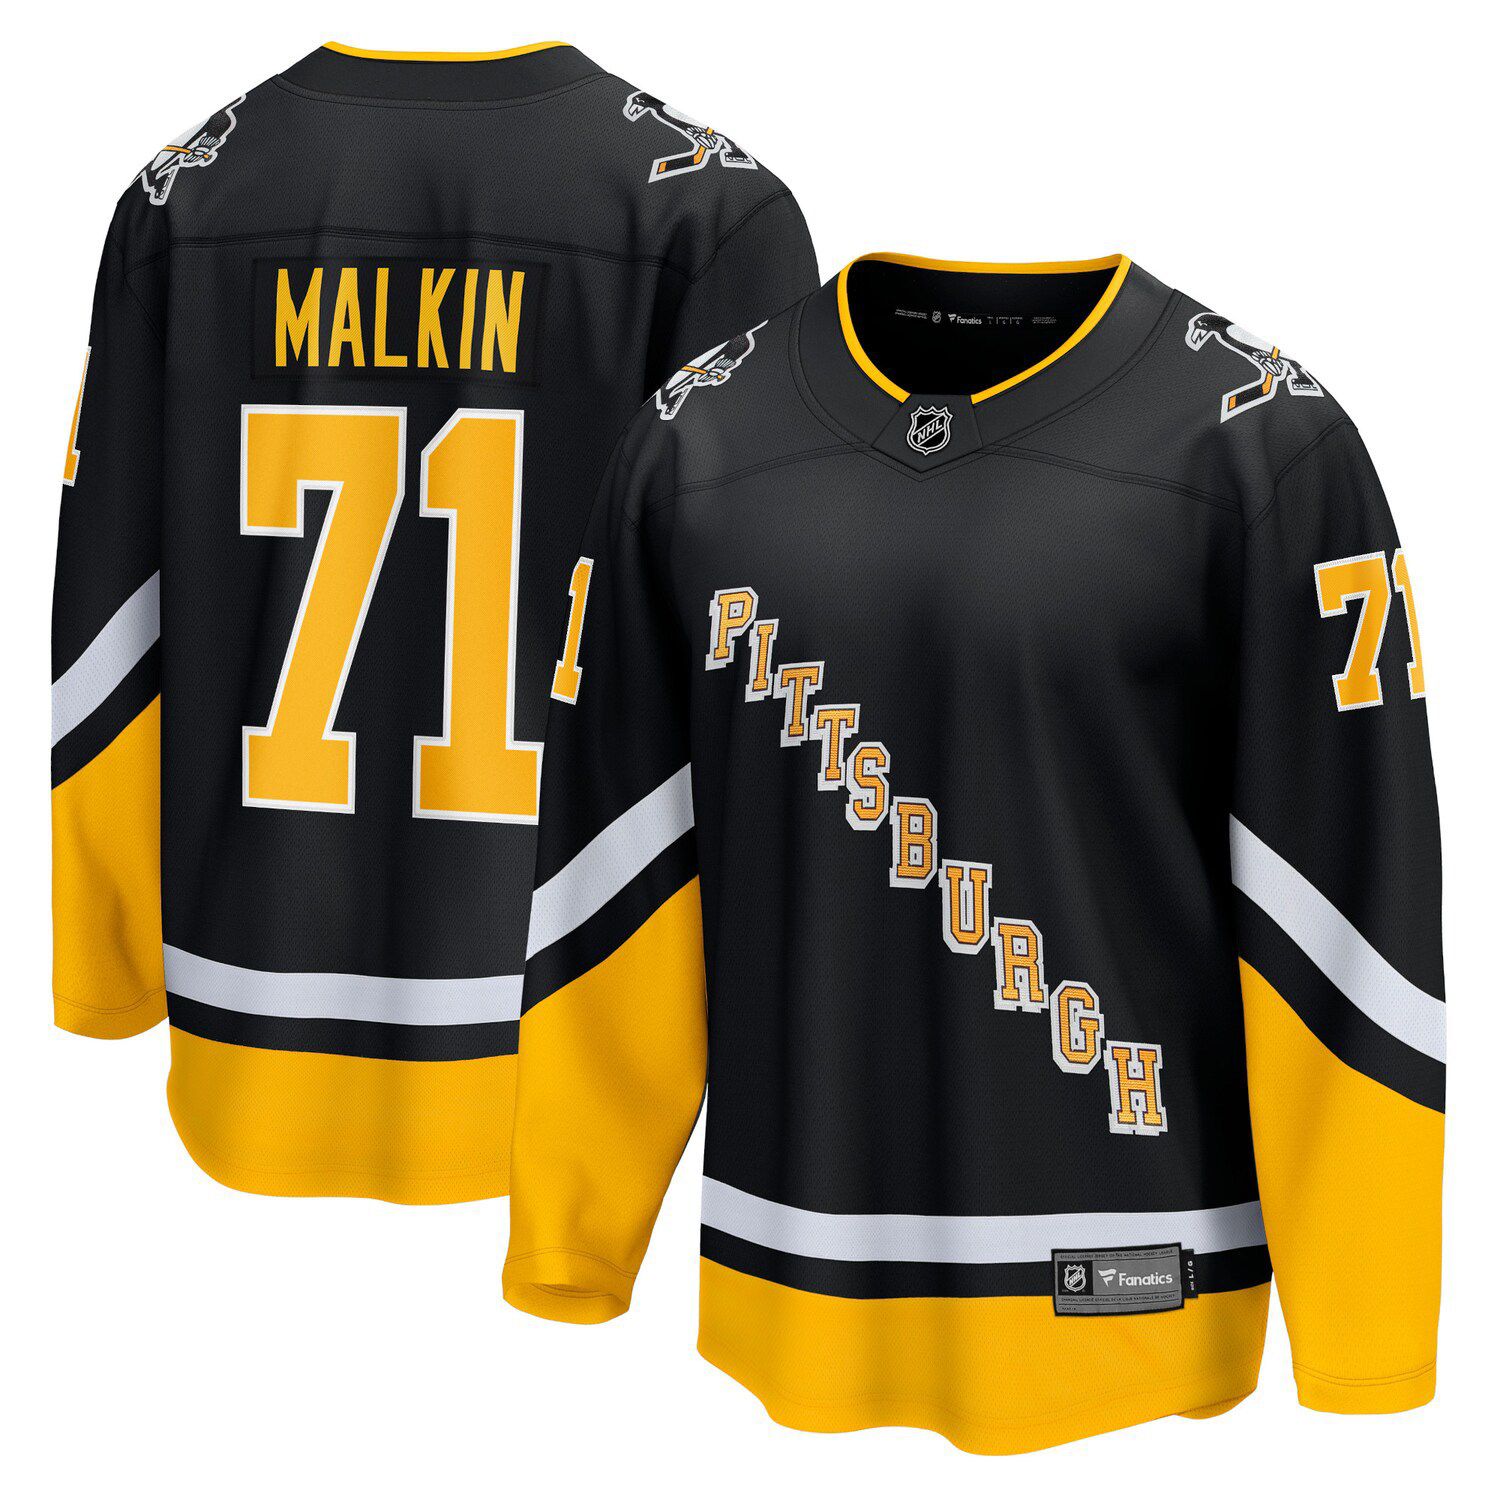 Malkin's iconic Penguins jersey